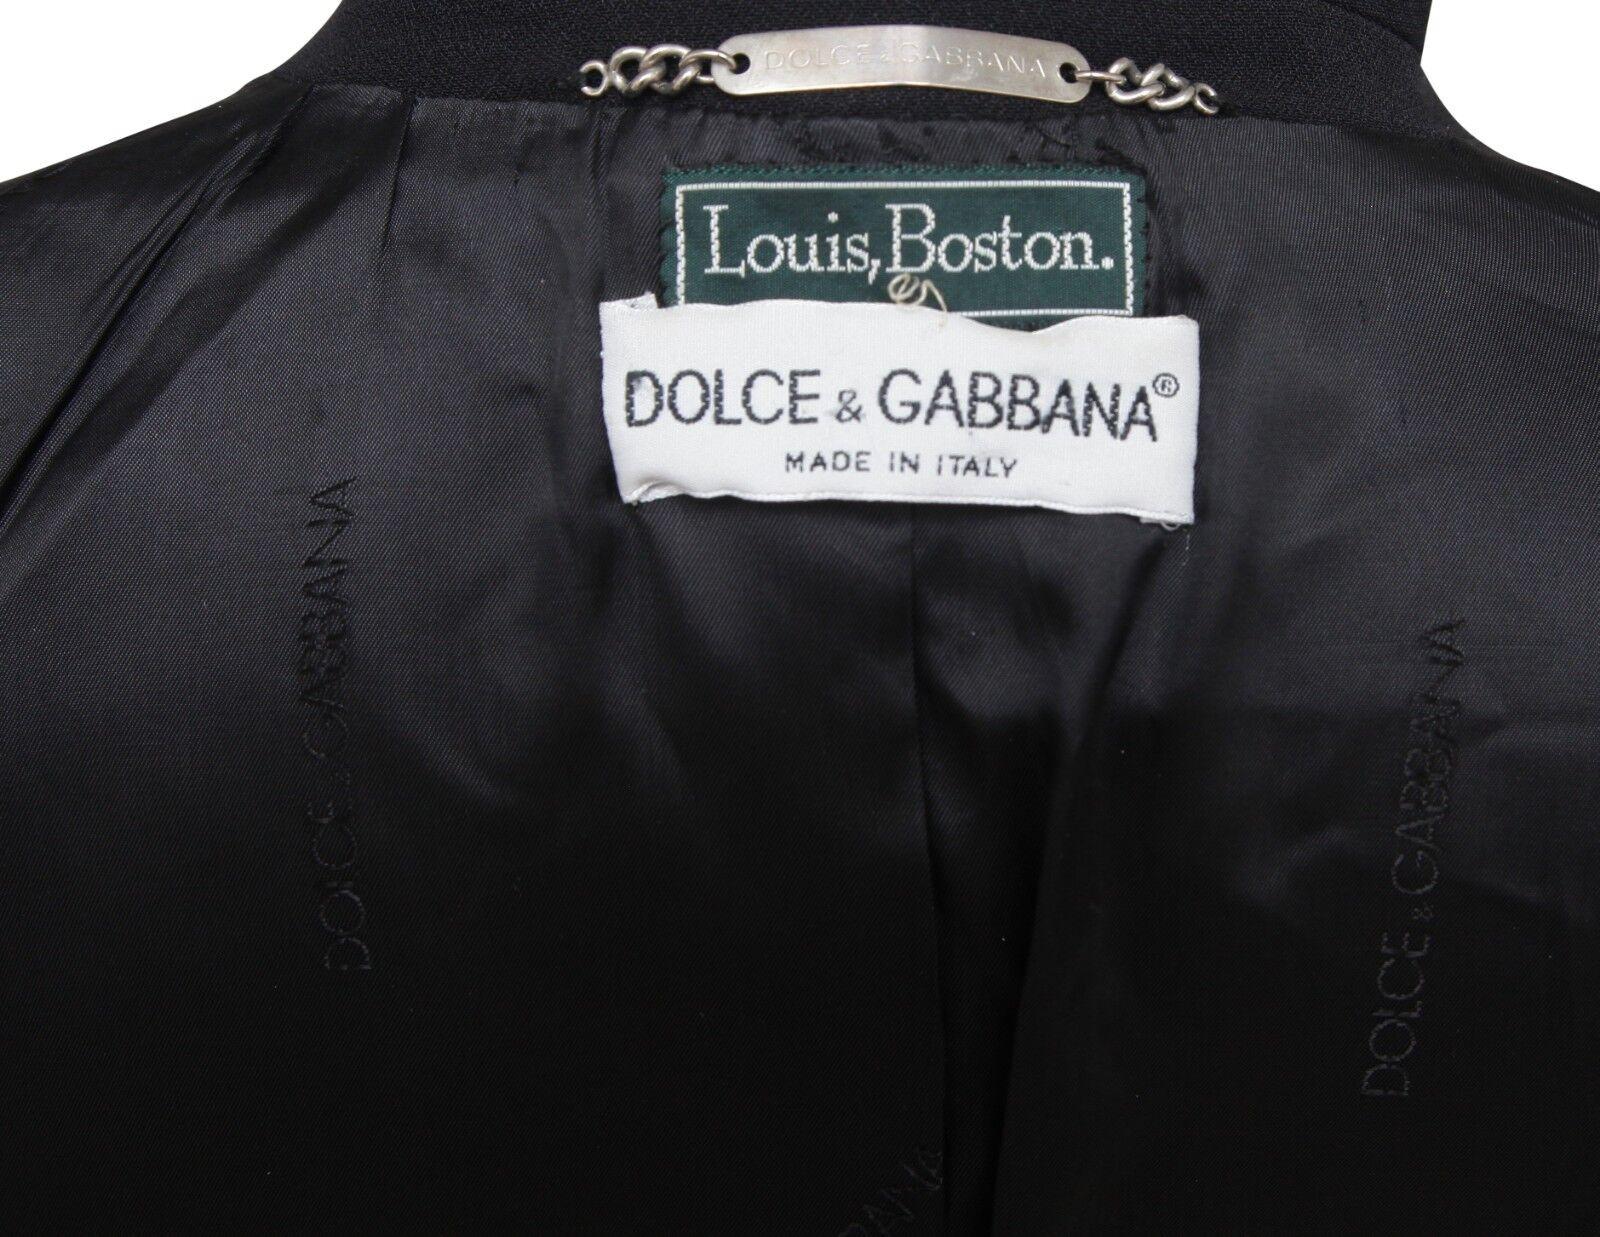 DOLCE & GABBANA Black Blazer Double Breasted Jacket Coat Sz 42 VINTAGE For Sale 2